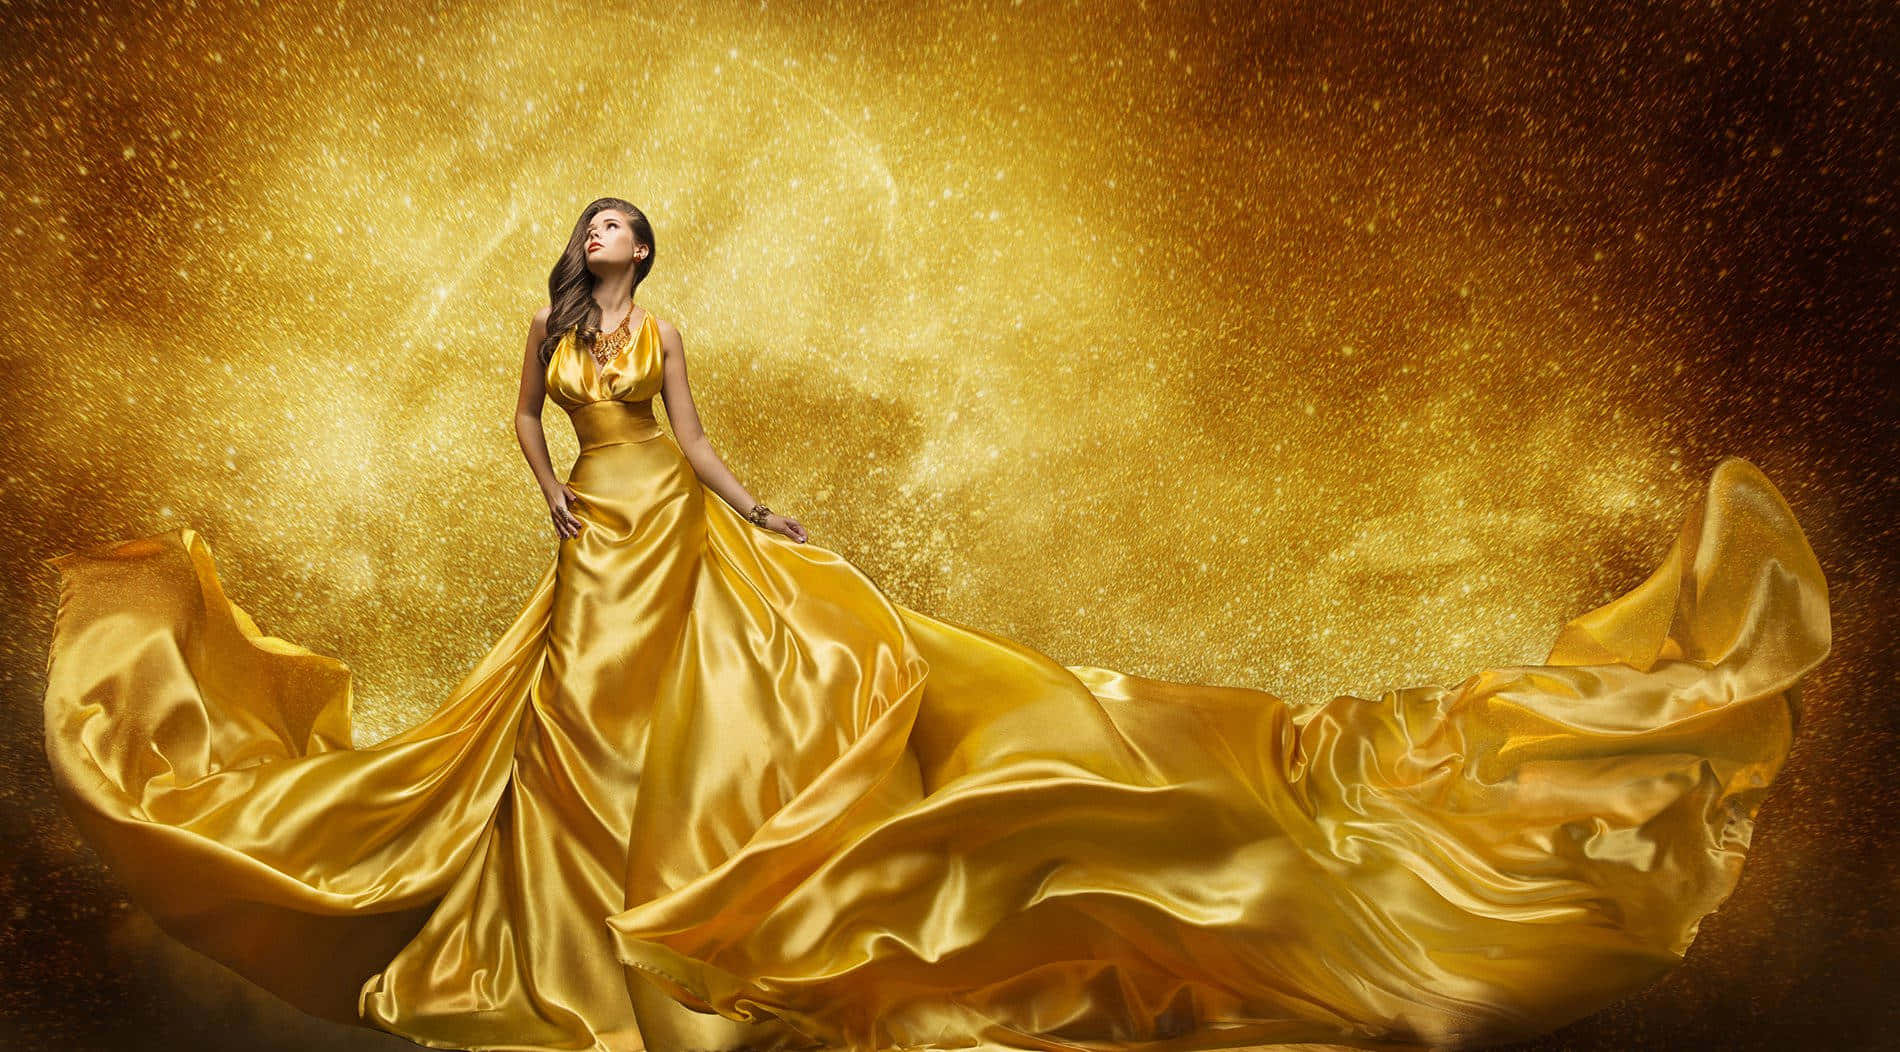 A Woman In A Golden Dress Is Posing